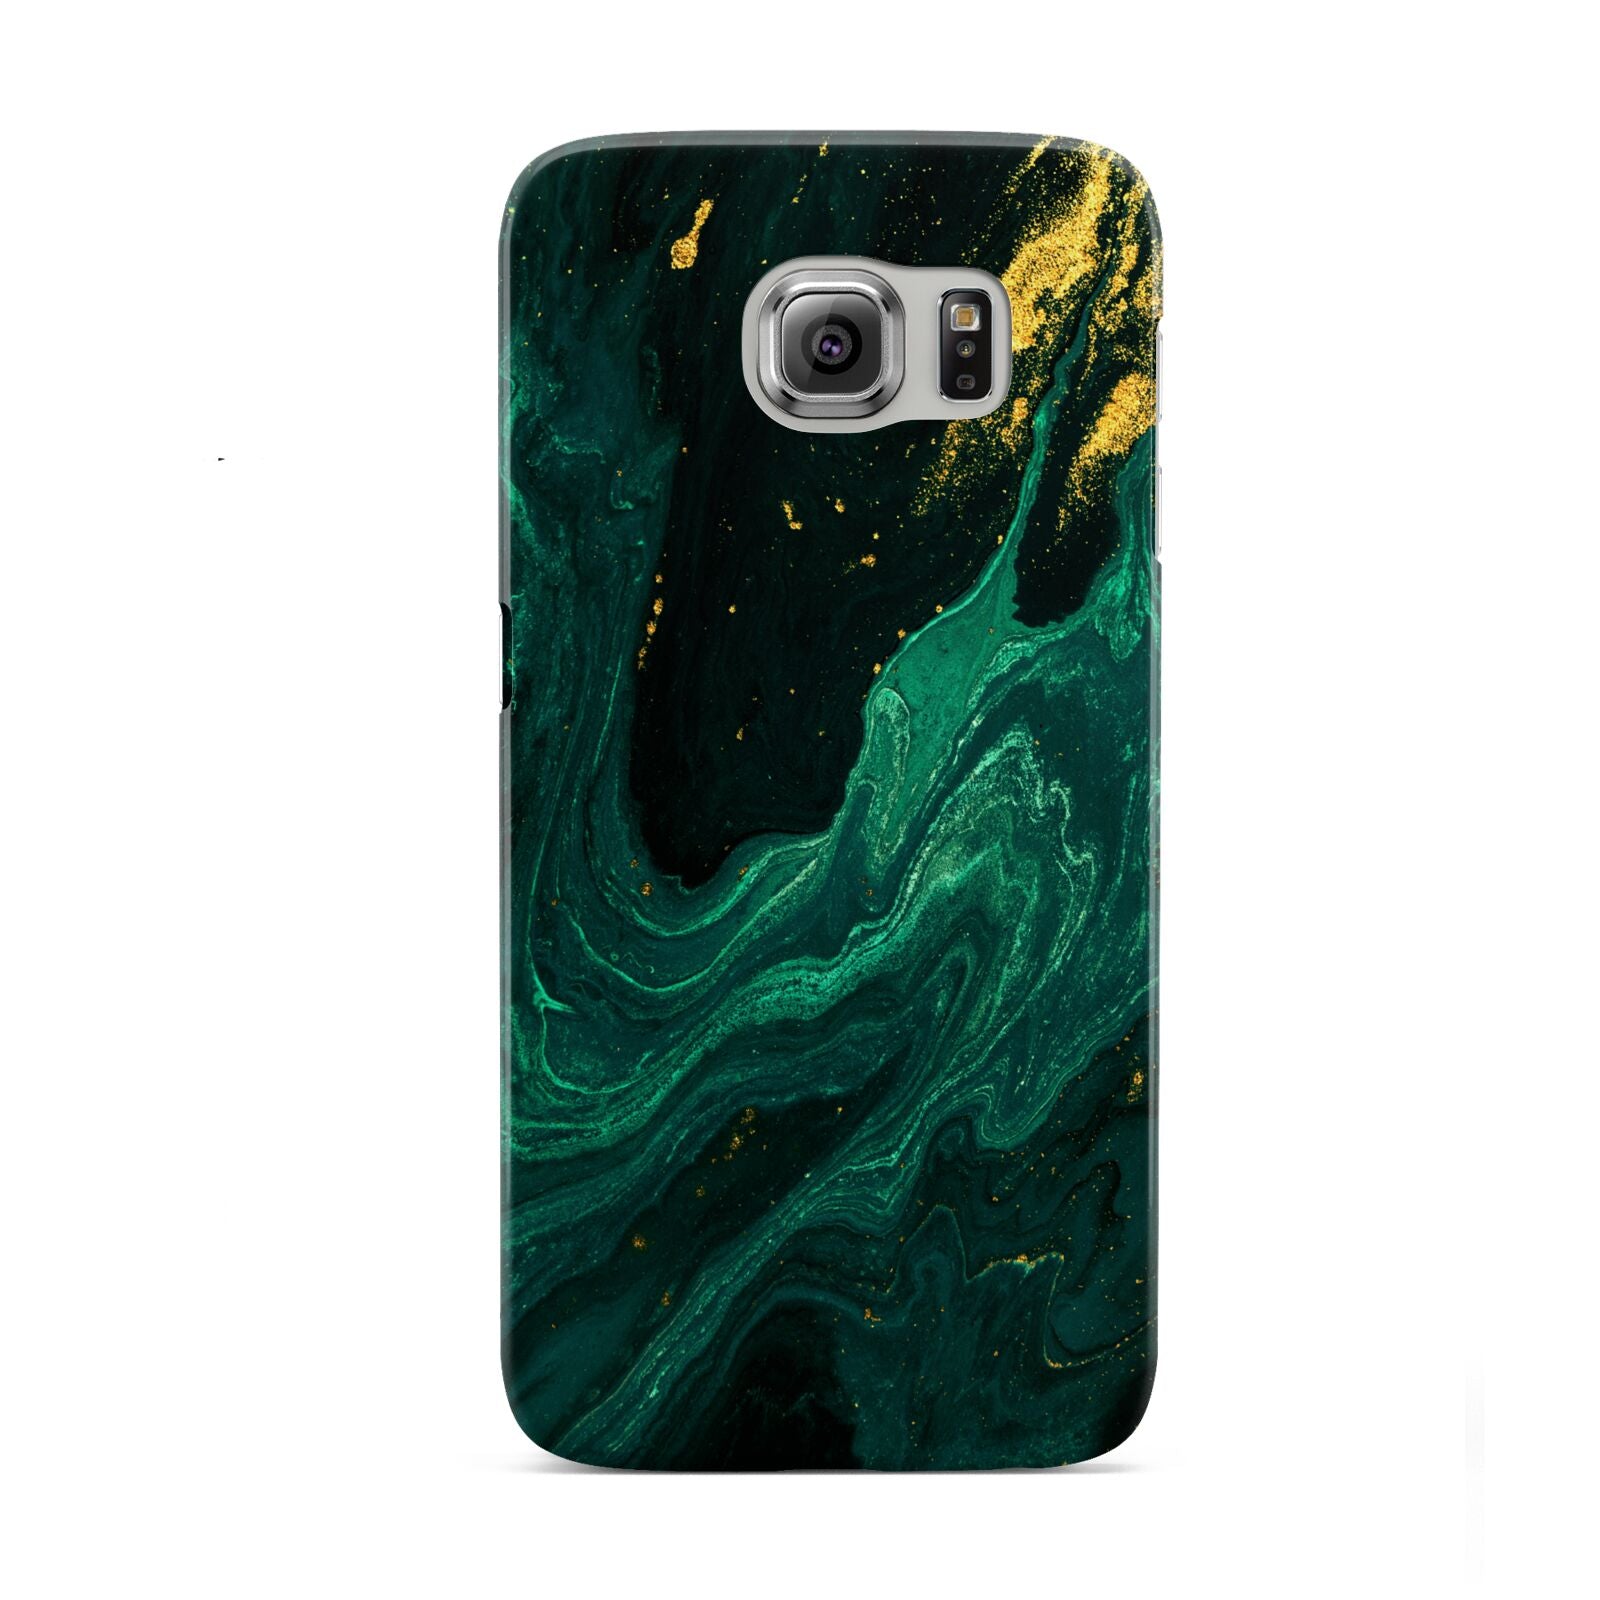 Emerald Green Samsung Galaxy S6 Case